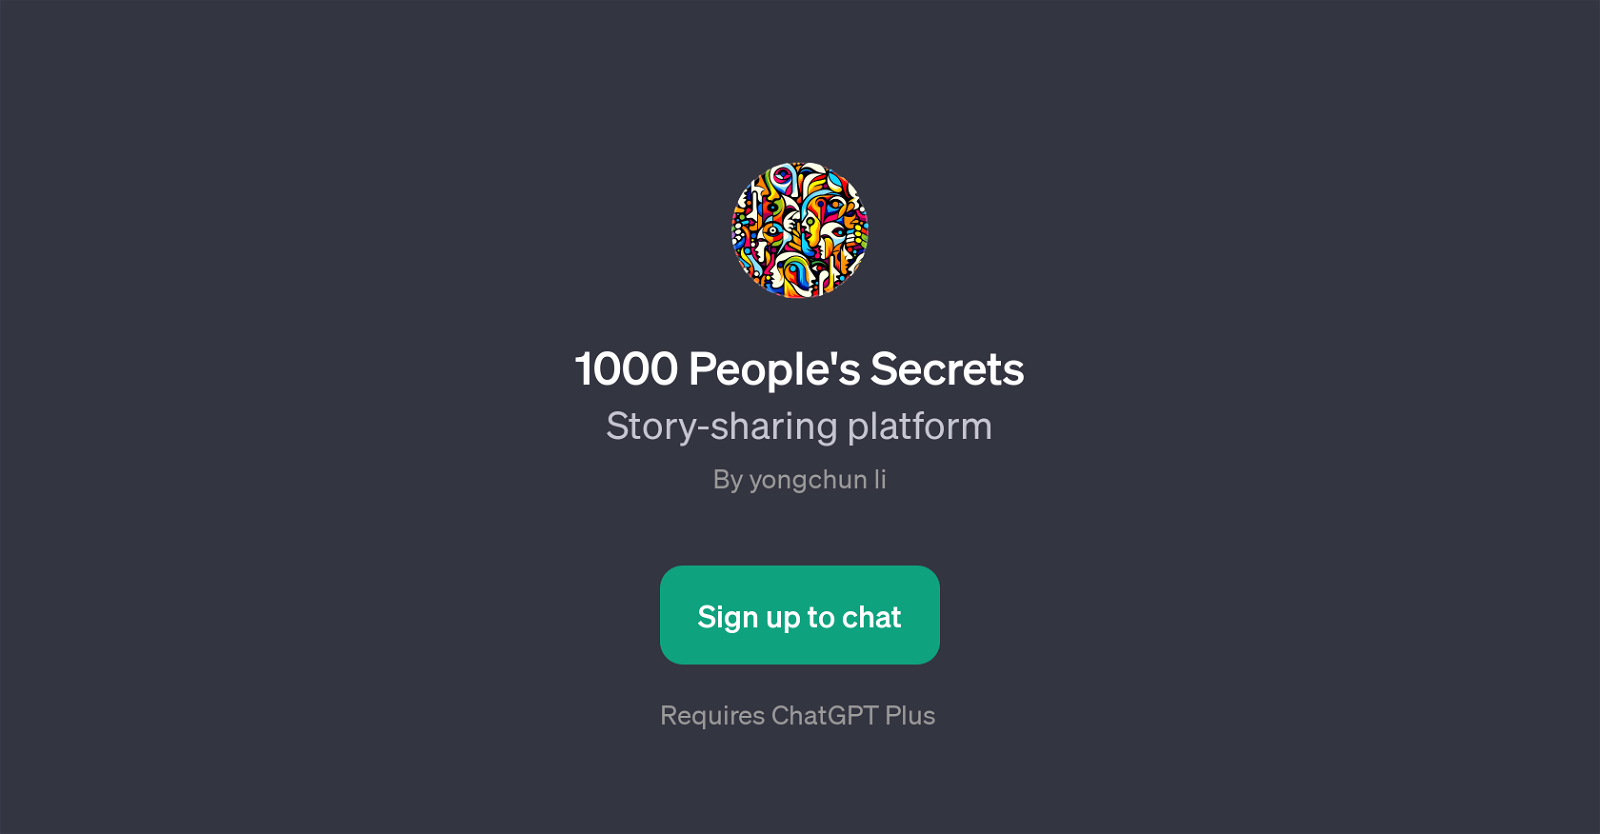 1000 People's Secrets website